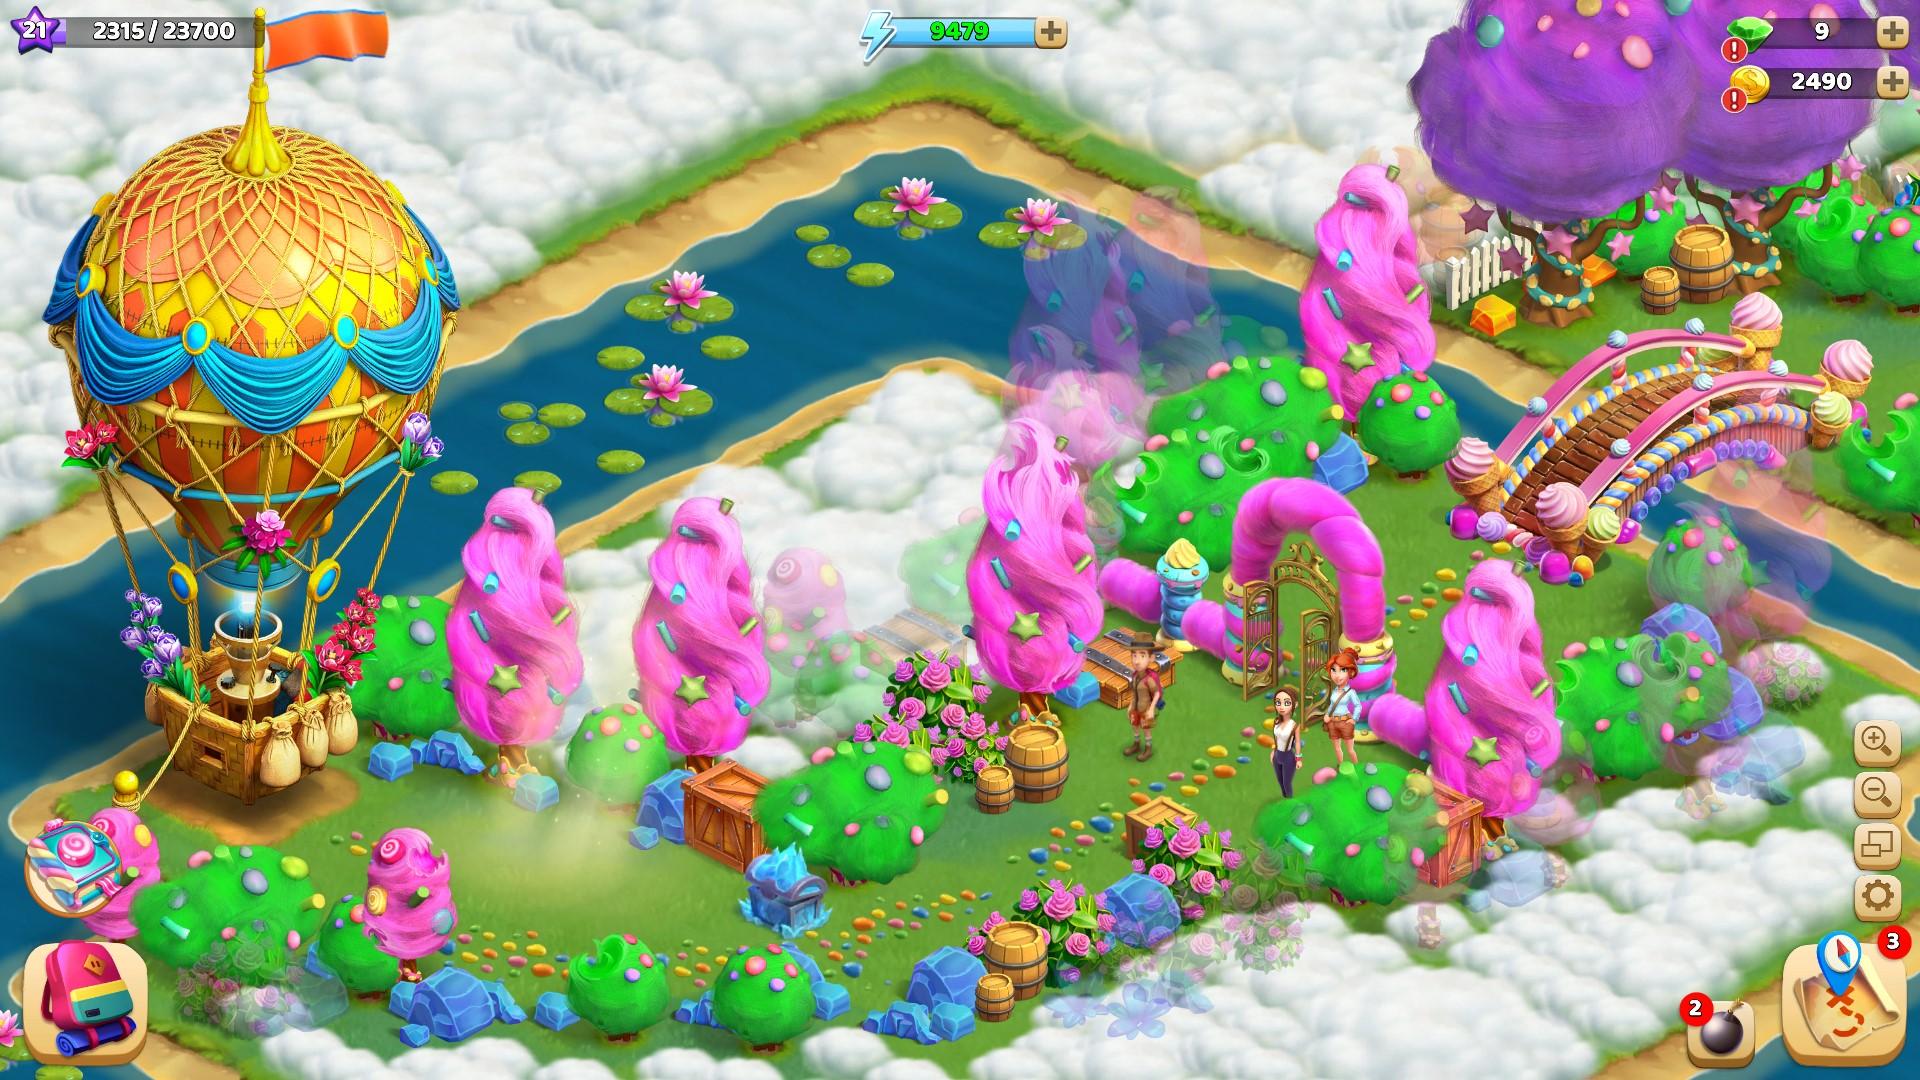 Funky Bay Farm & Adventure game 42.0.33 Screenshot 14